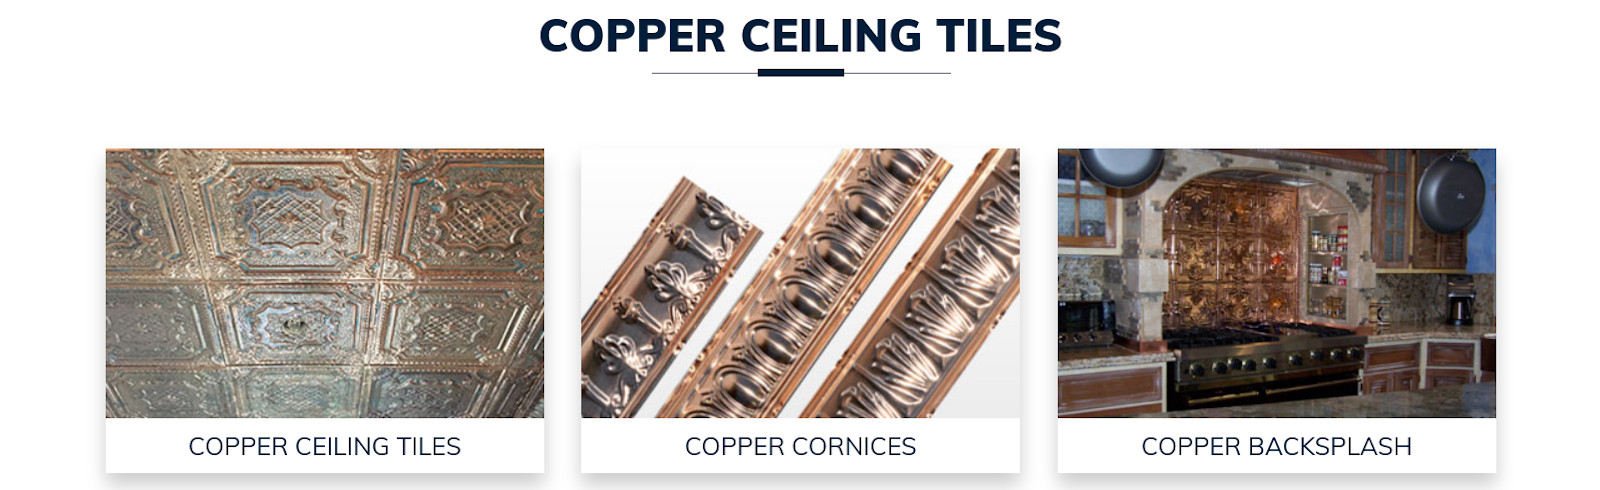 copper ceiling tiles good value